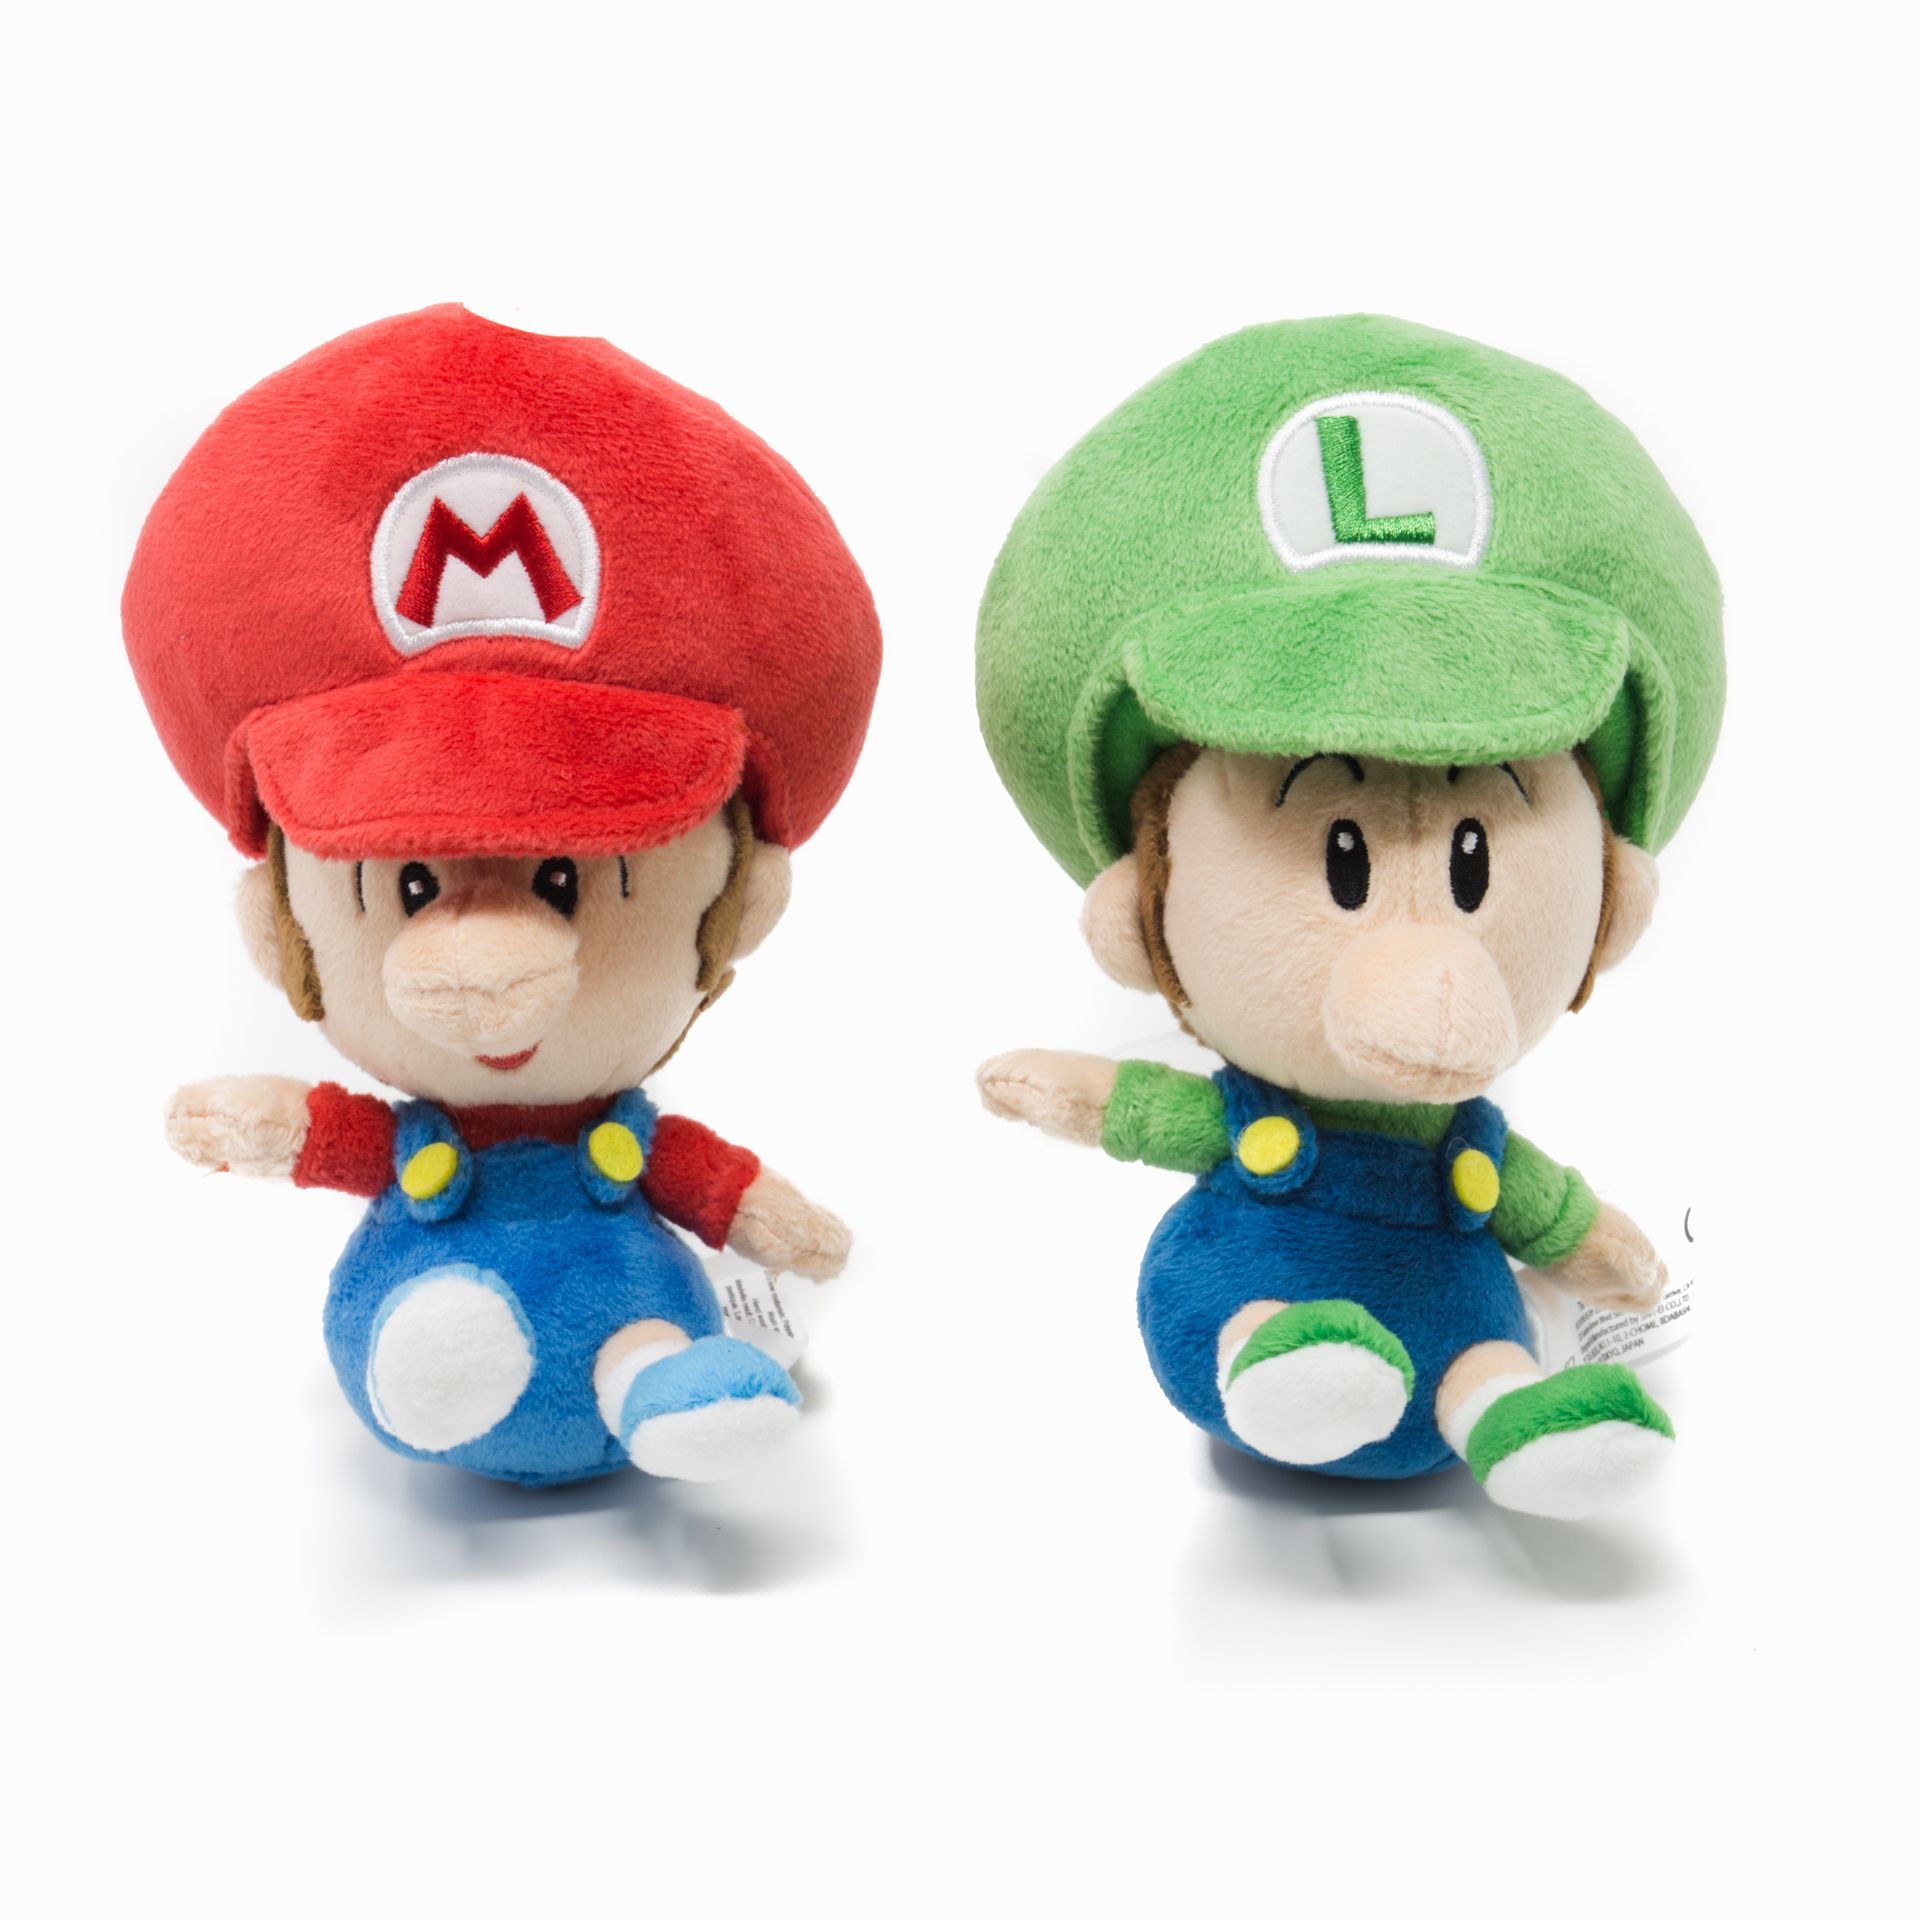 Super Mario Mario and Baby Luigi Plush. Super mario, Mario